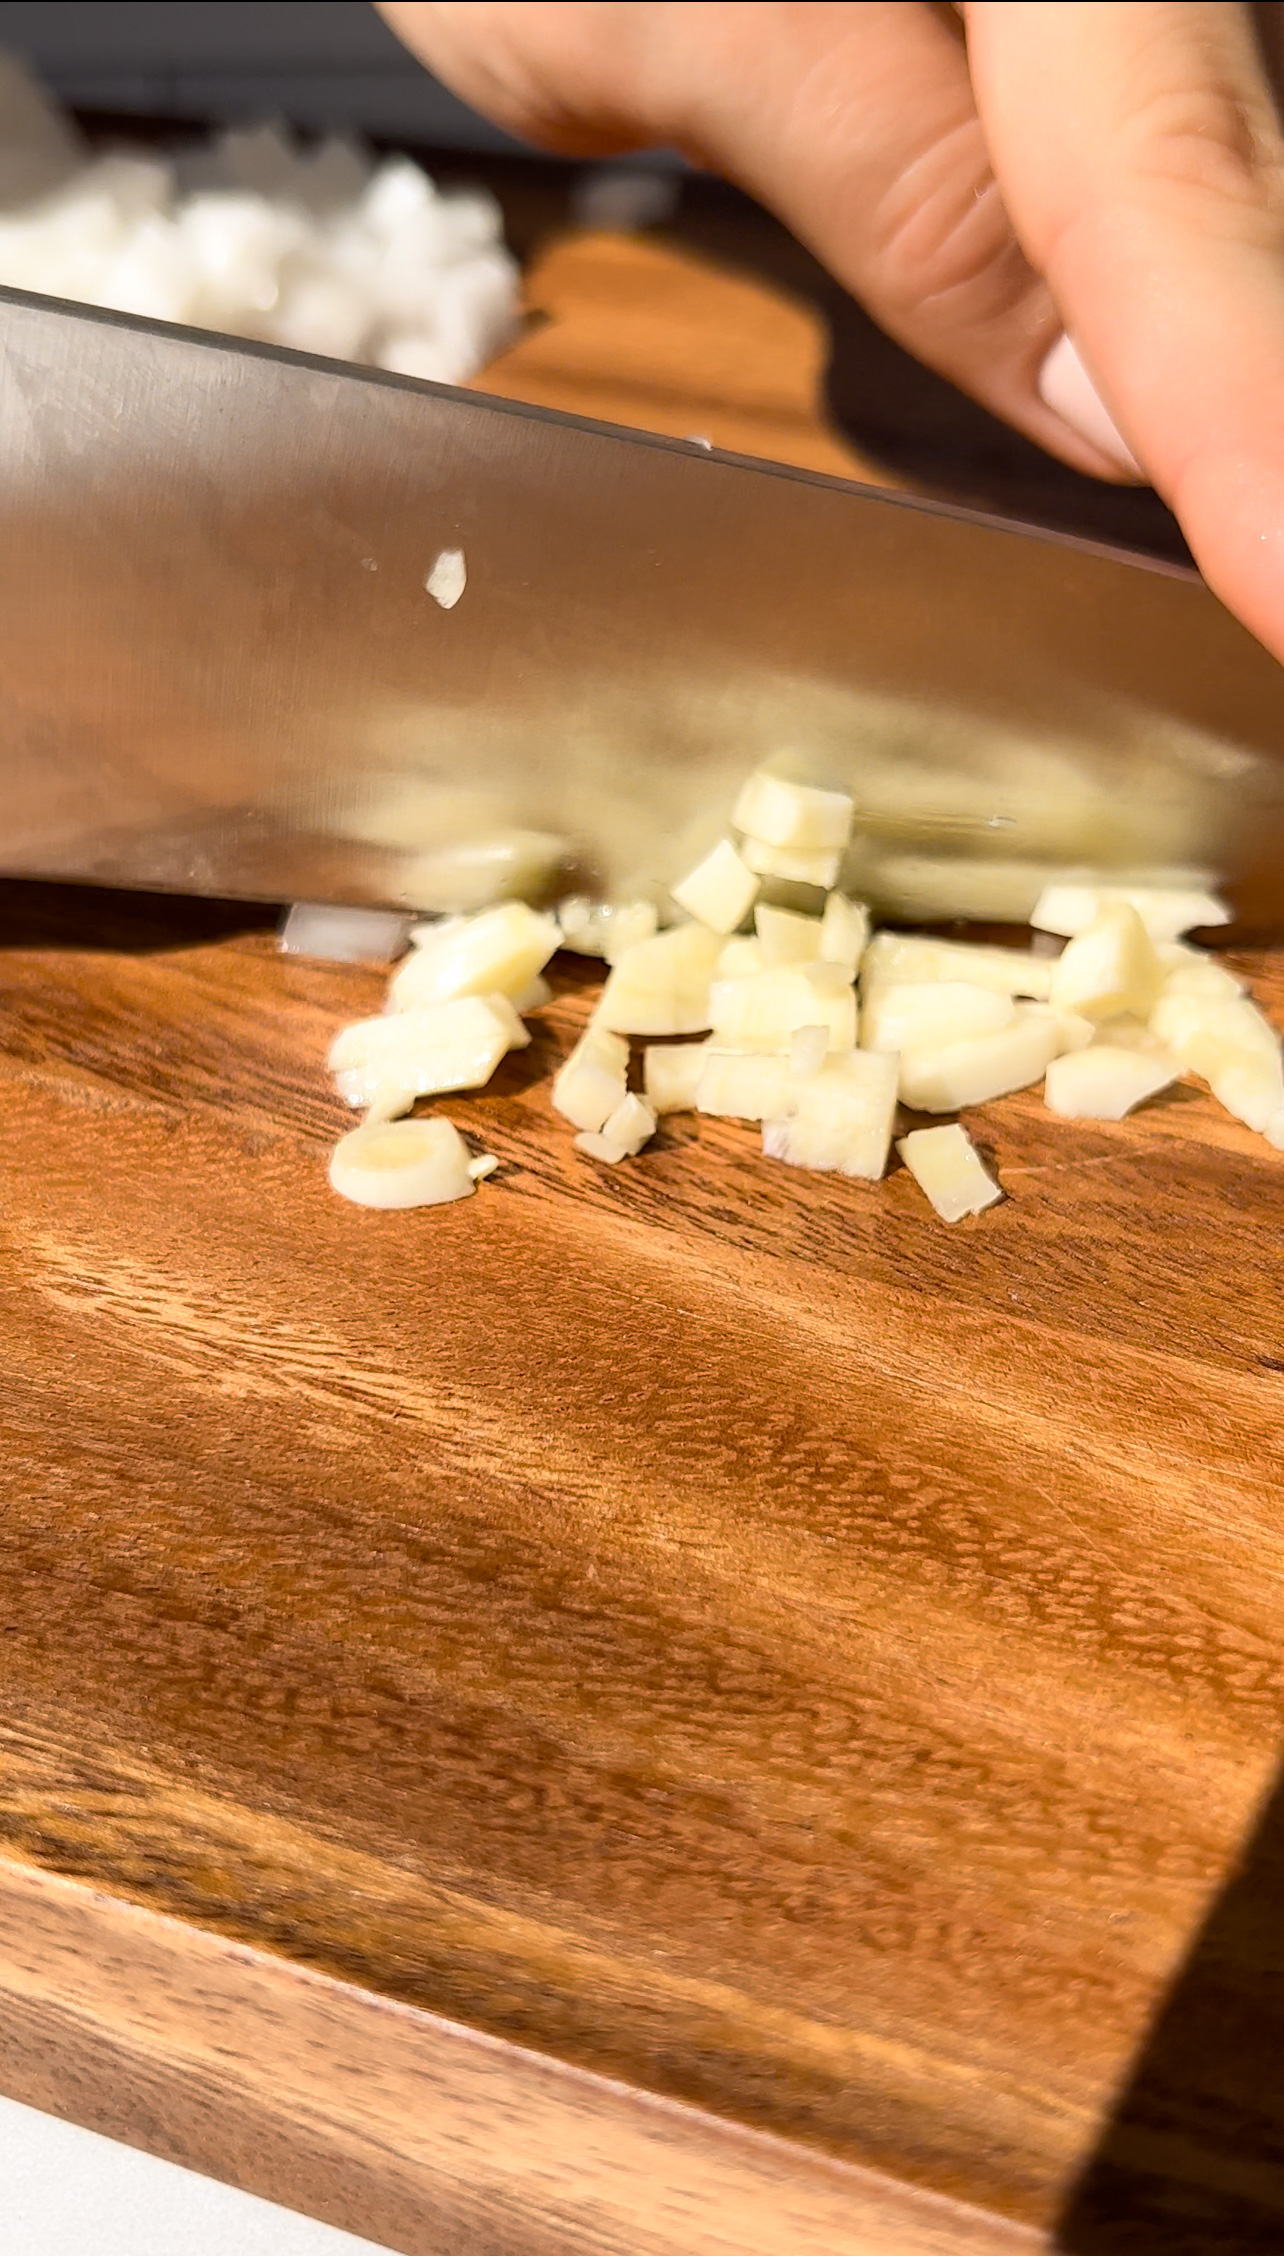 knife mincing garlic